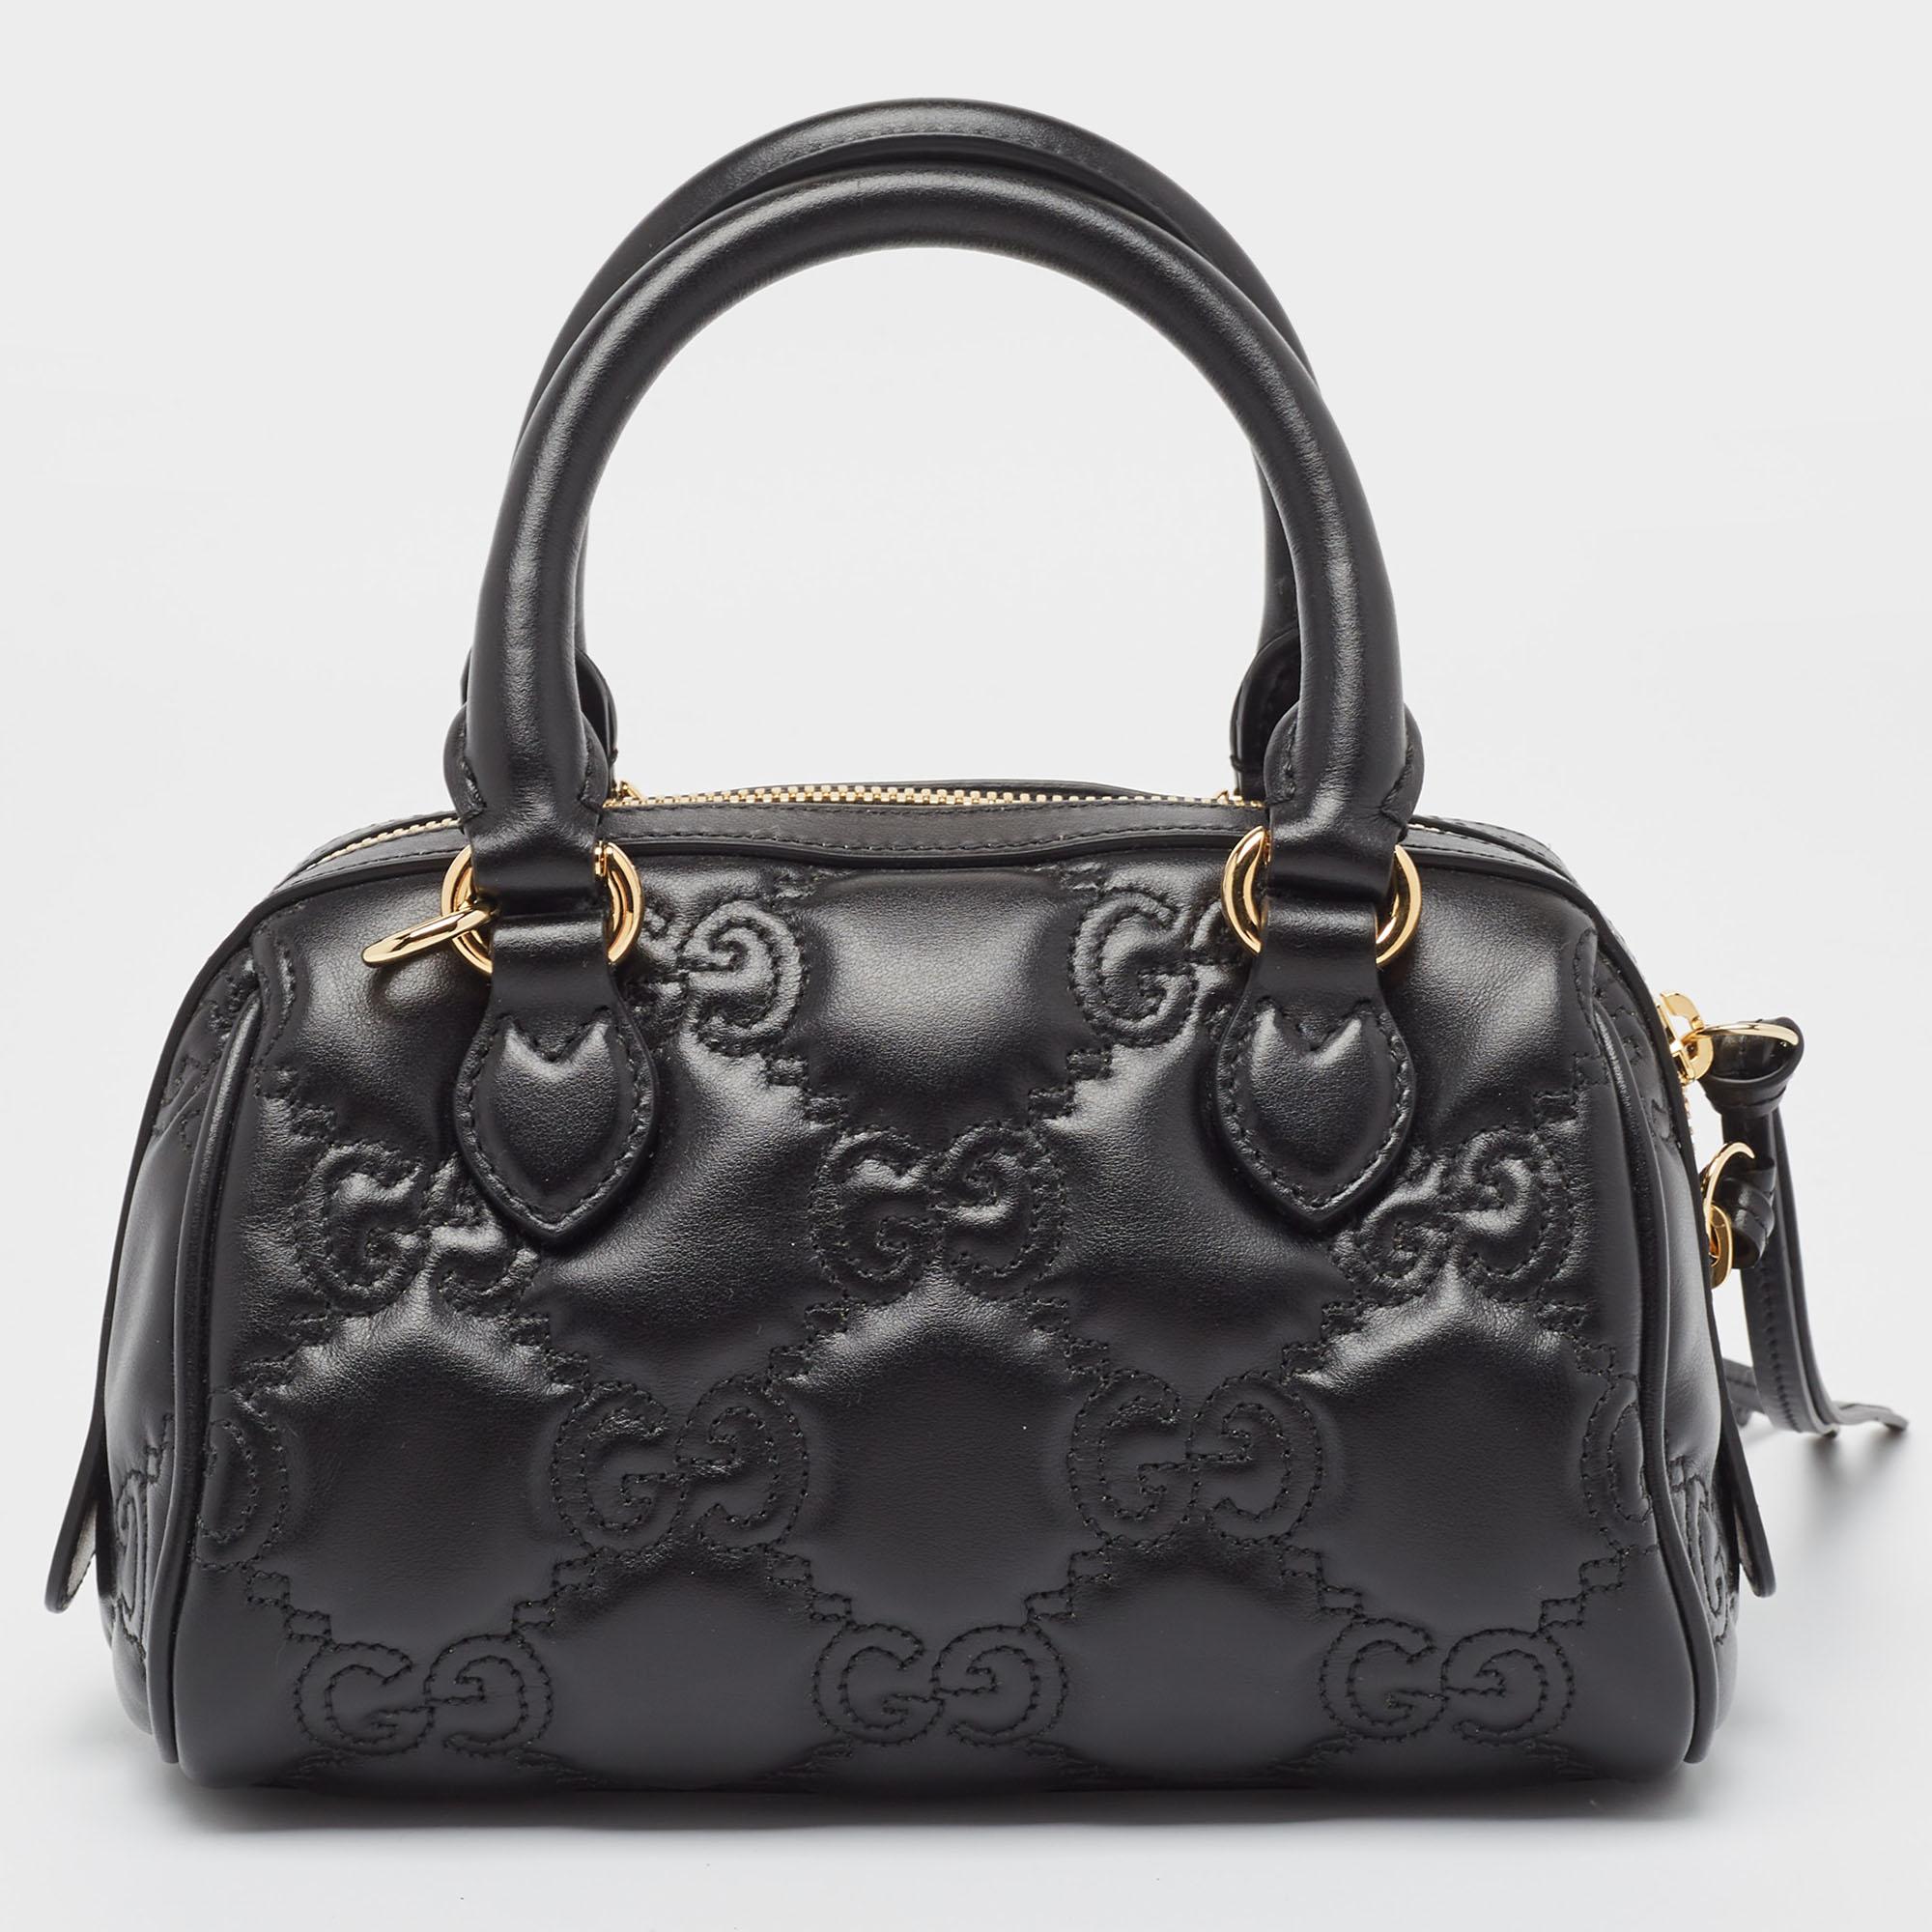 Gucci Black GG Matelasse Leather Mini Bowler Bag For Sale 6